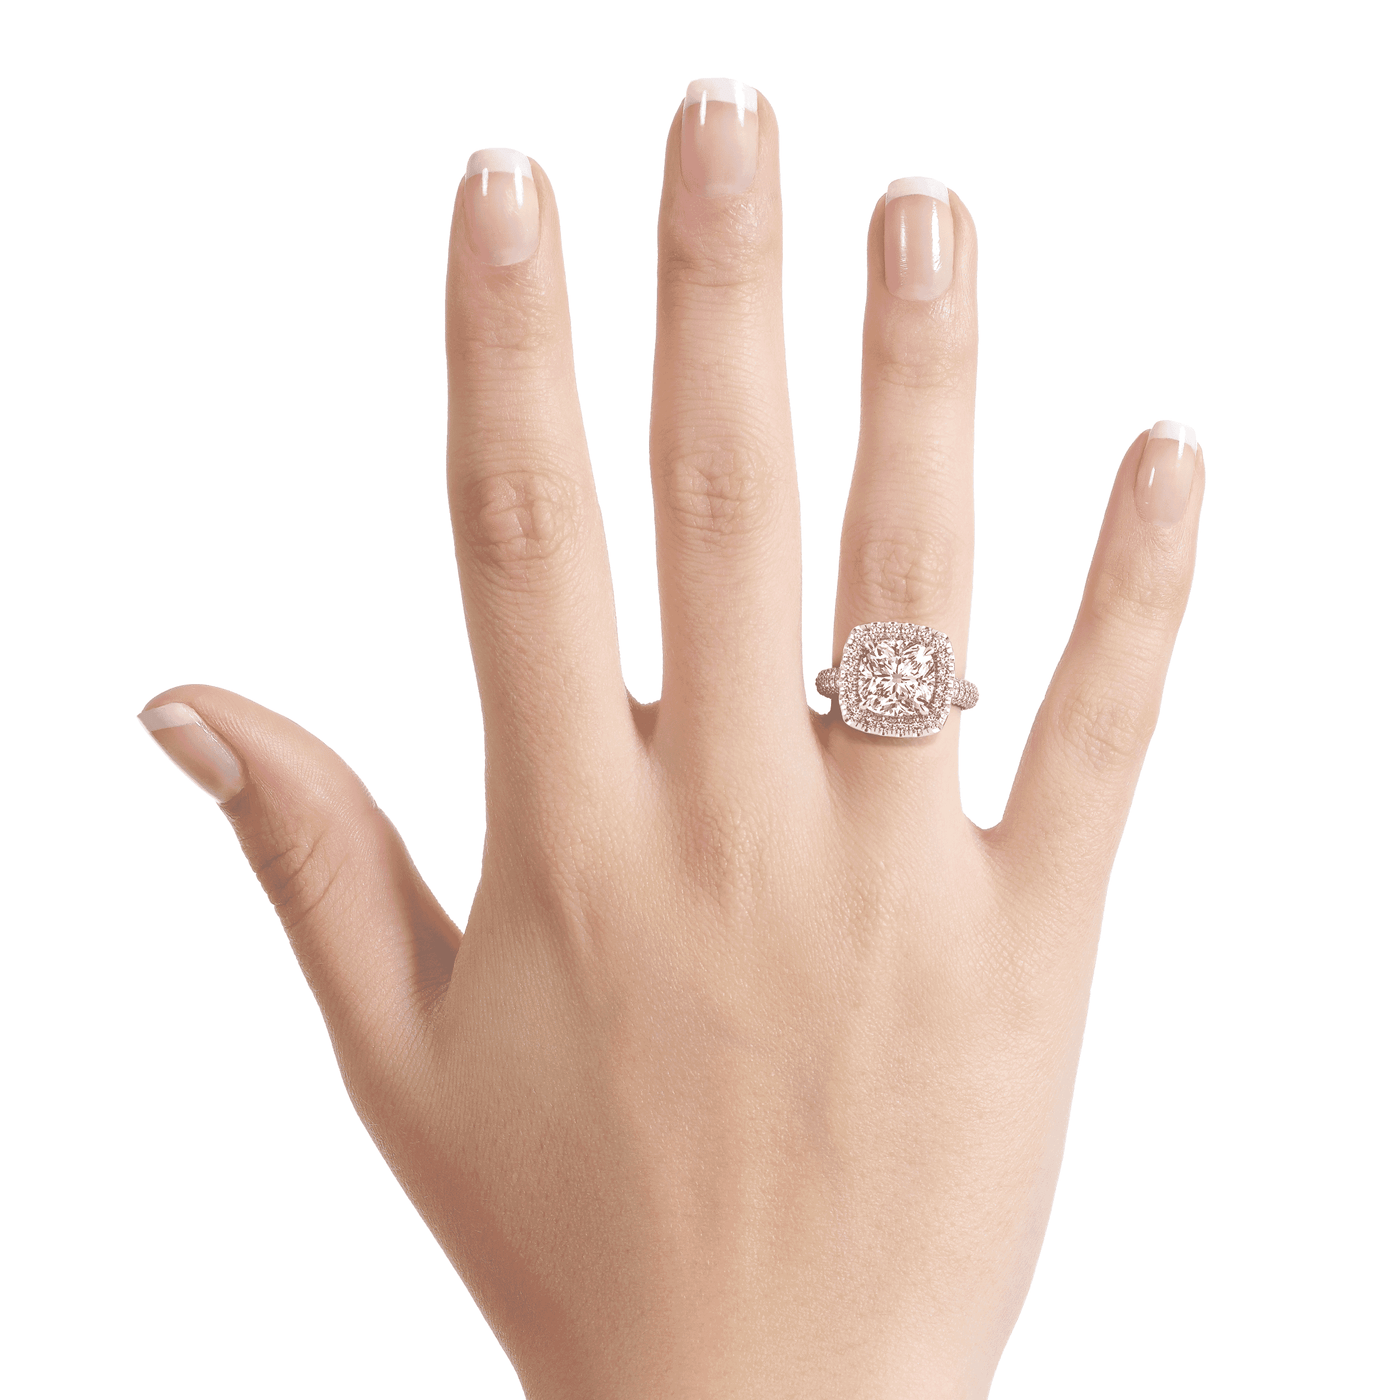 Luna Halo Set Engagement Ring with Round Center Diamond